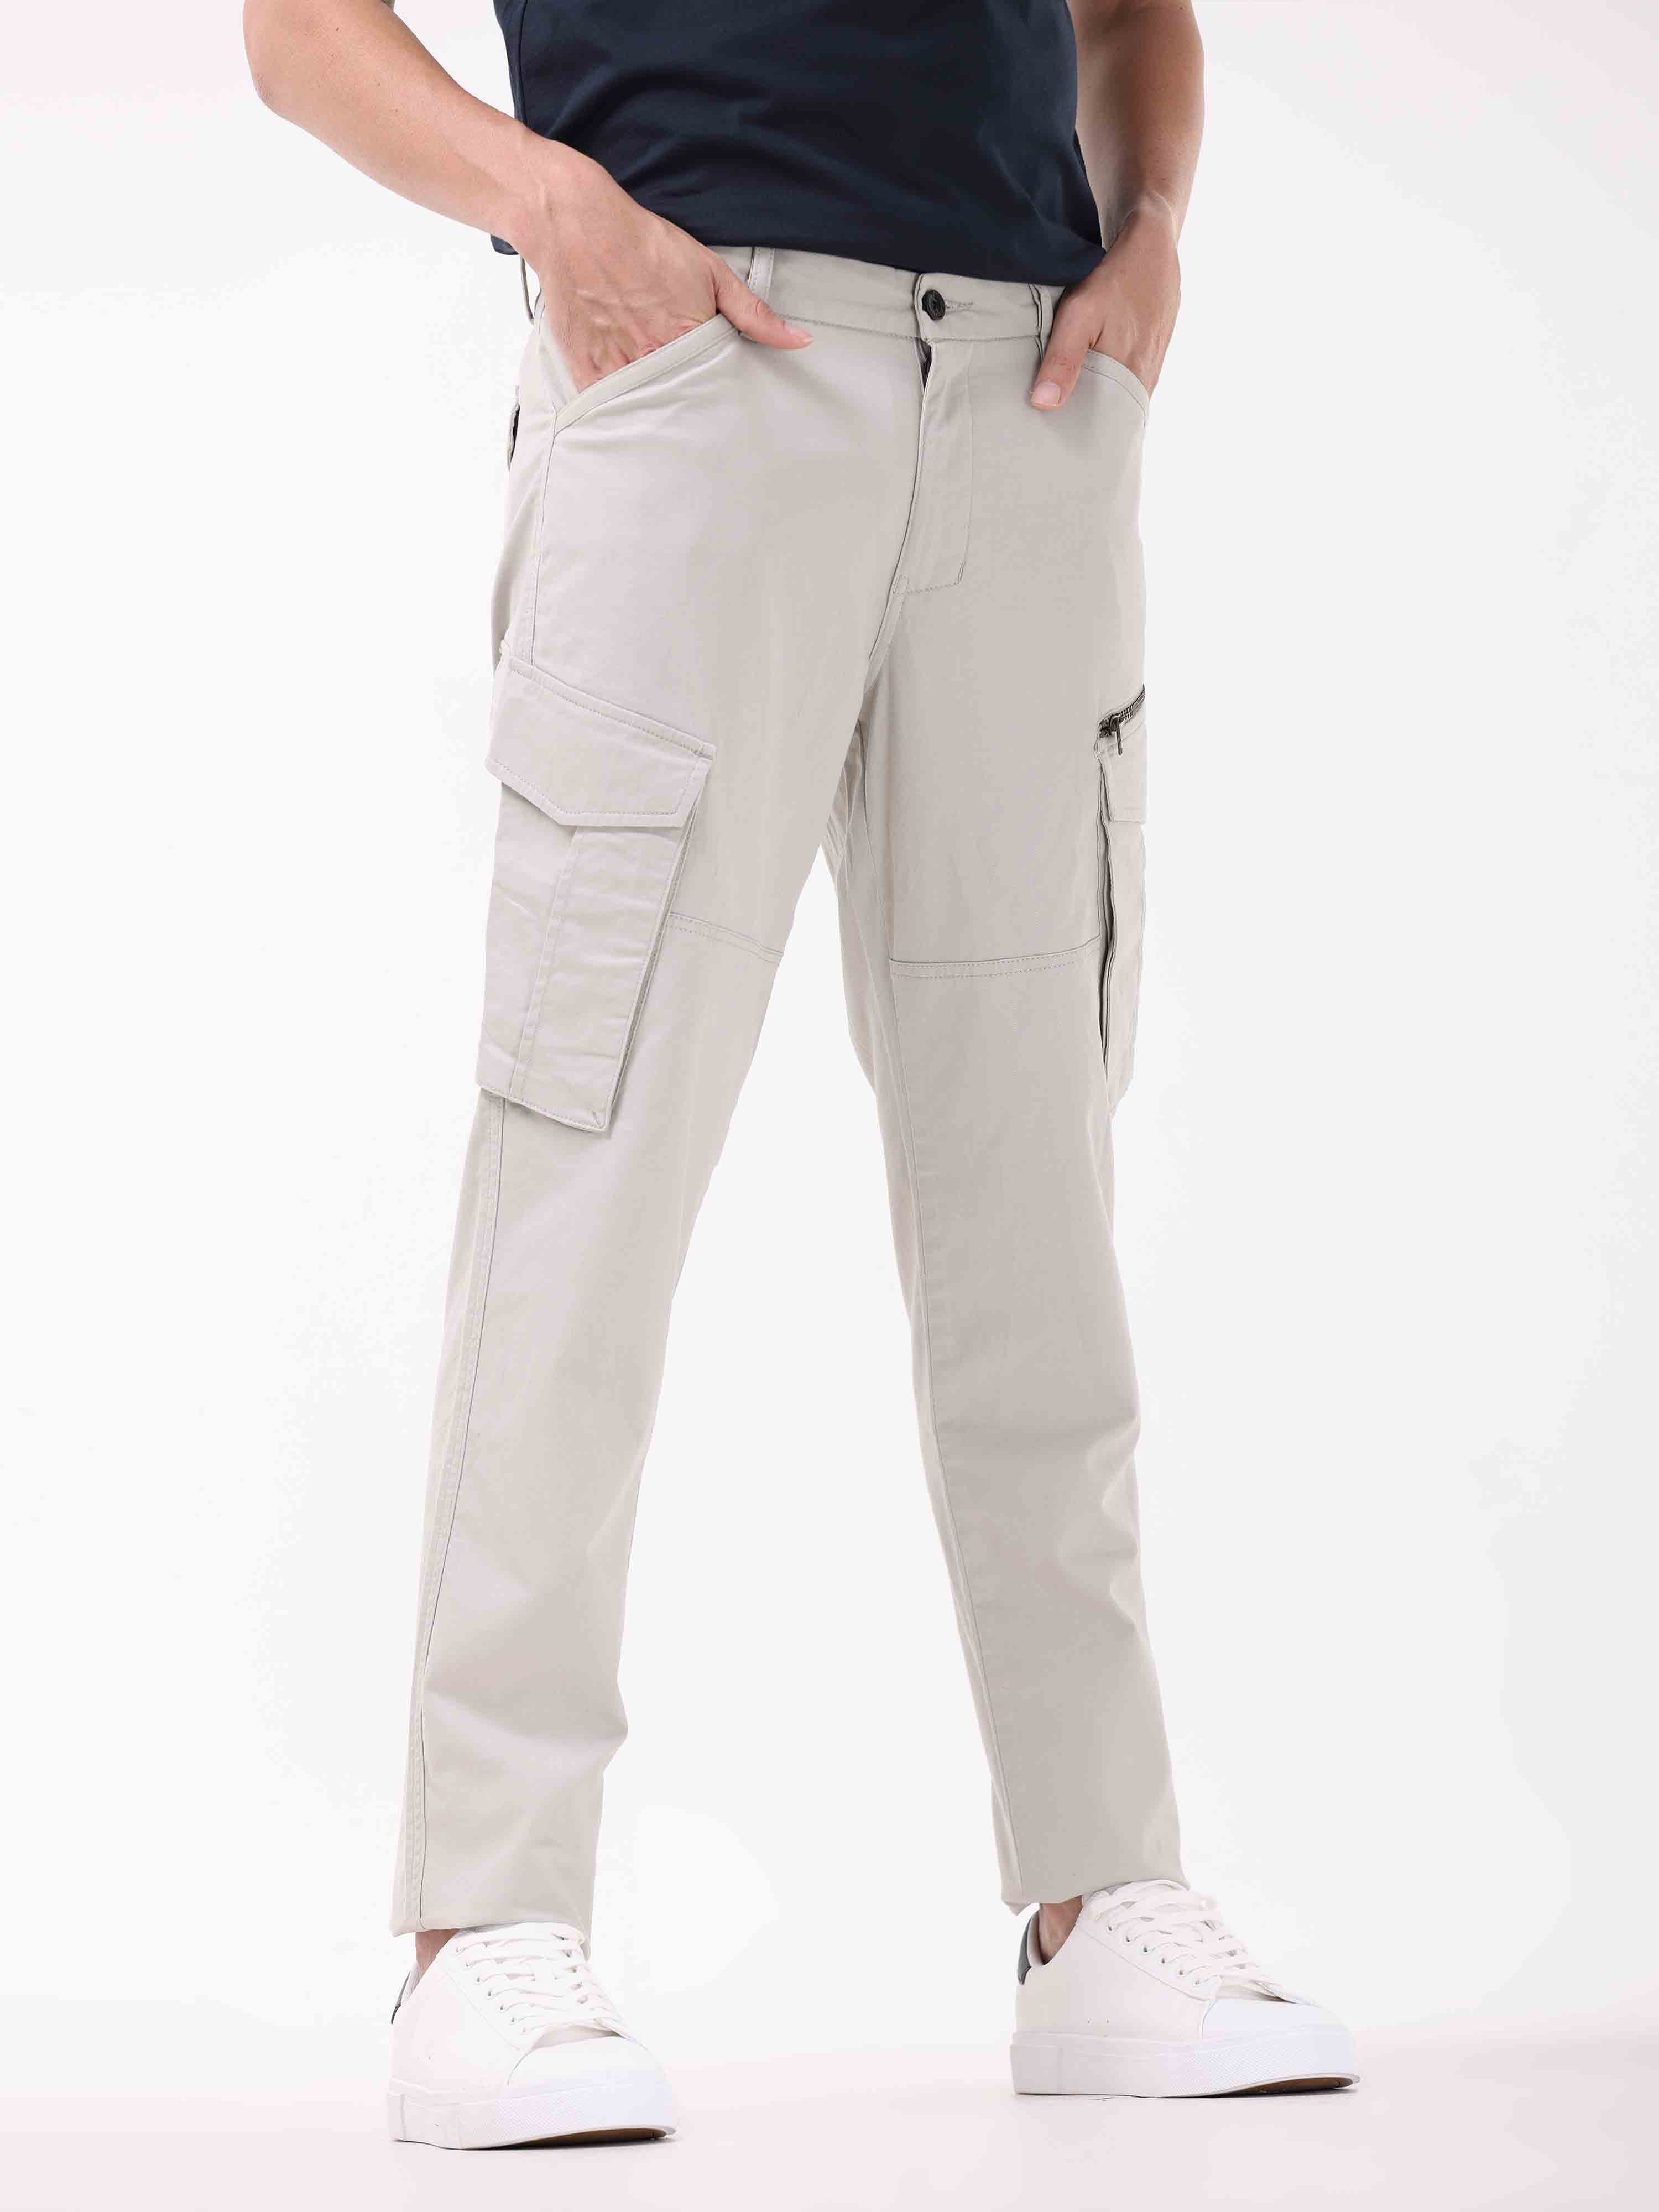 XYXIONGMAO Men's Techwear Tactical Pants Cargo Jogger Pants Harem Hip Hop Pants  White (White, M) at Amazon Men's Clothing store